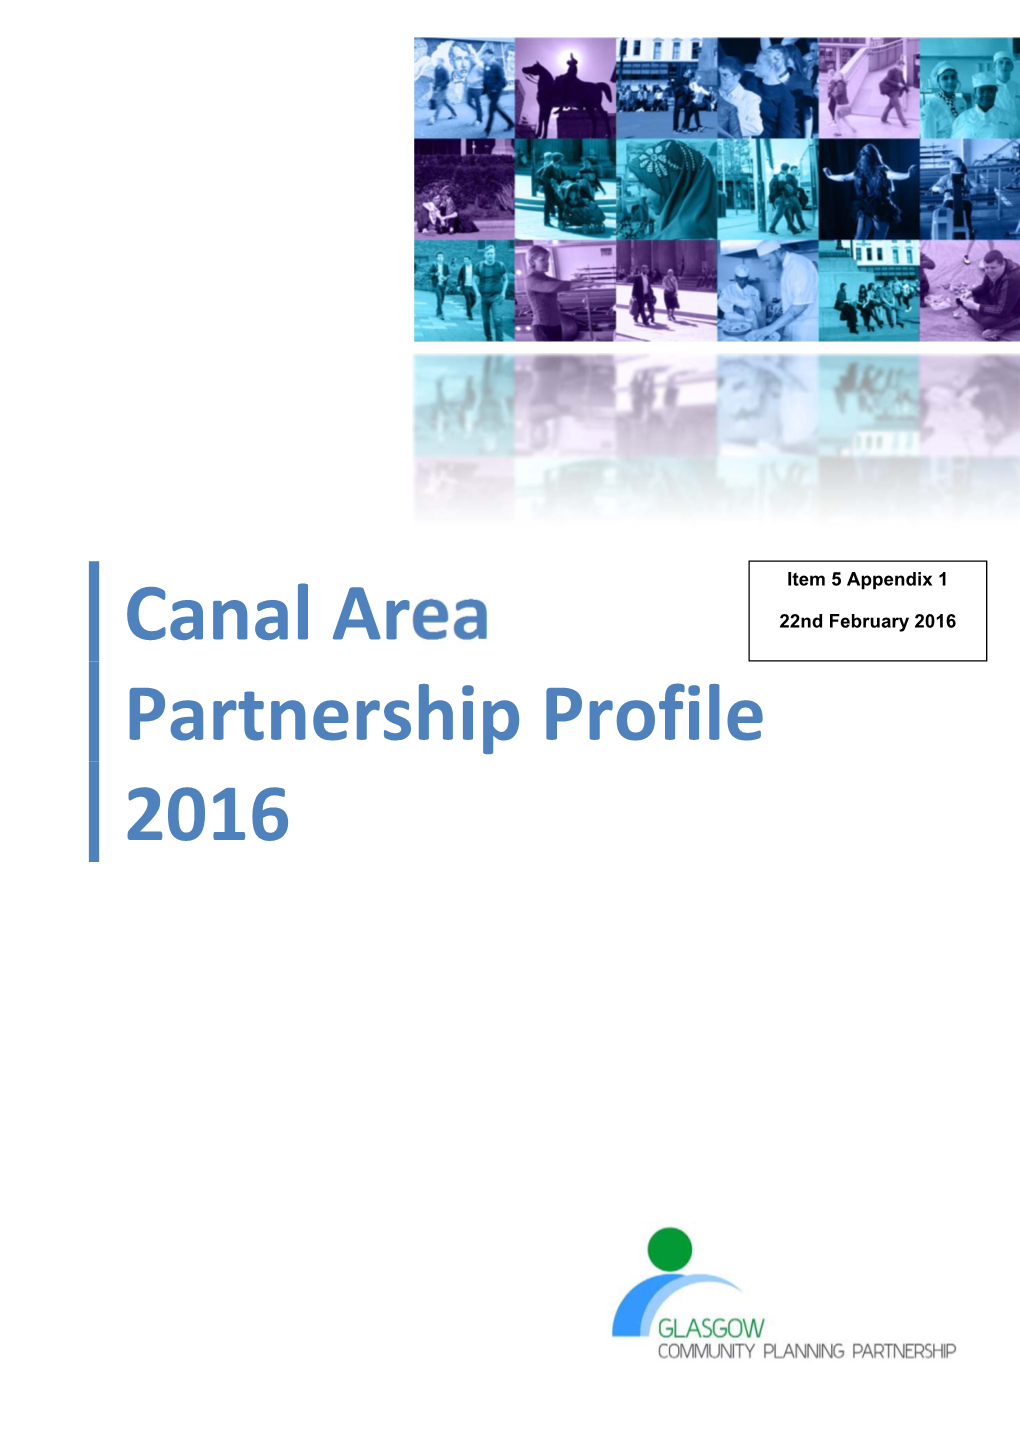 Canal Area Partnership Profile 2016